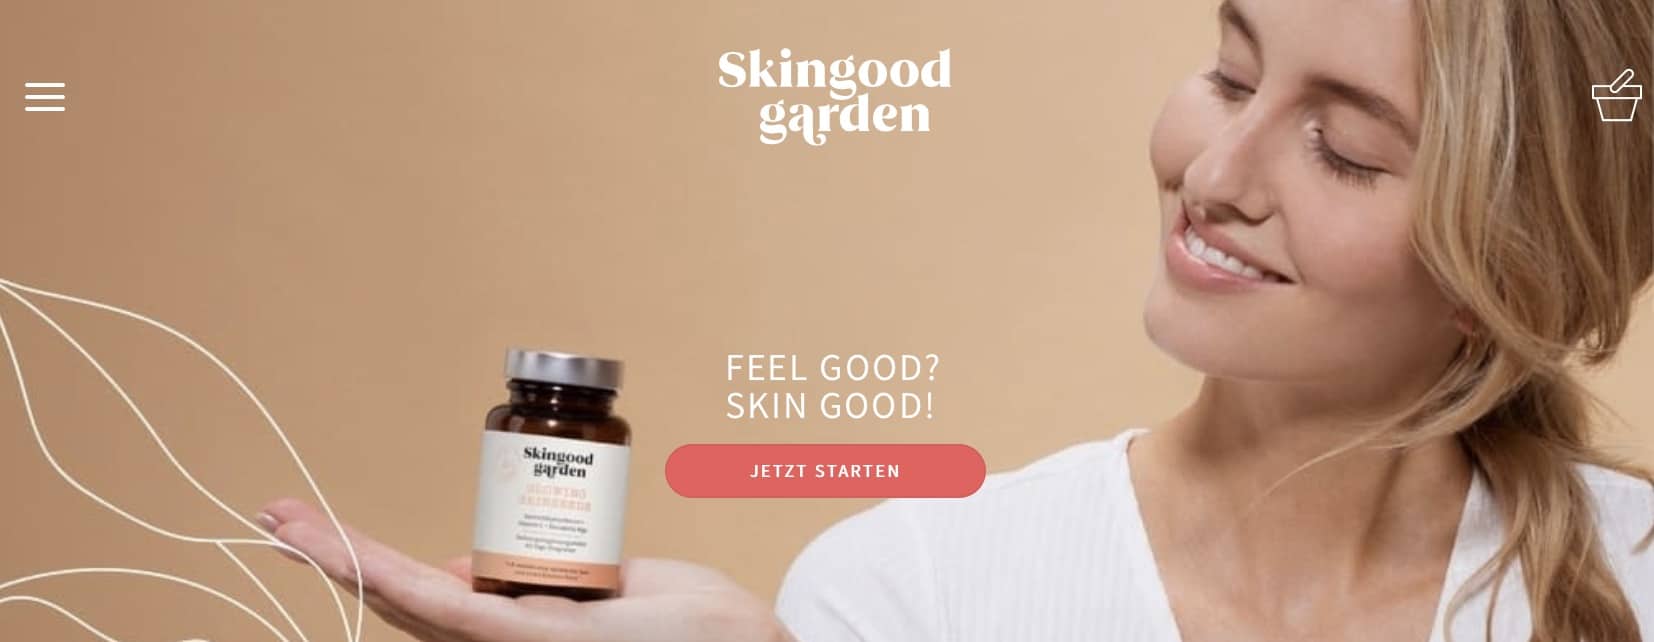 Skingood Garden Erfahrungen Produkte Skin Seeds Body Seeds Nahrungsergänzungsmittel